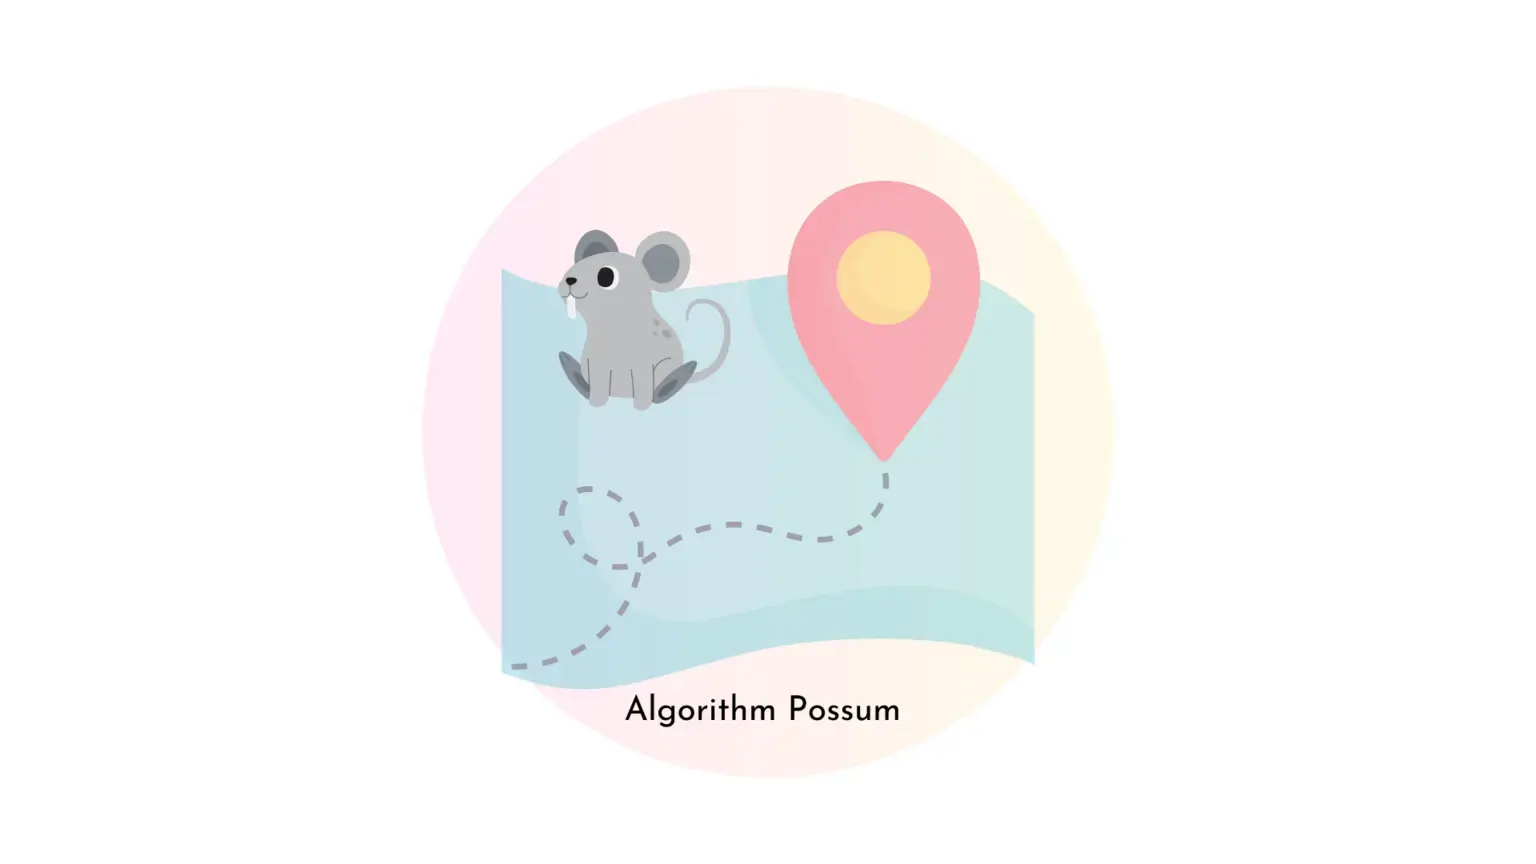 الگوریتم possum